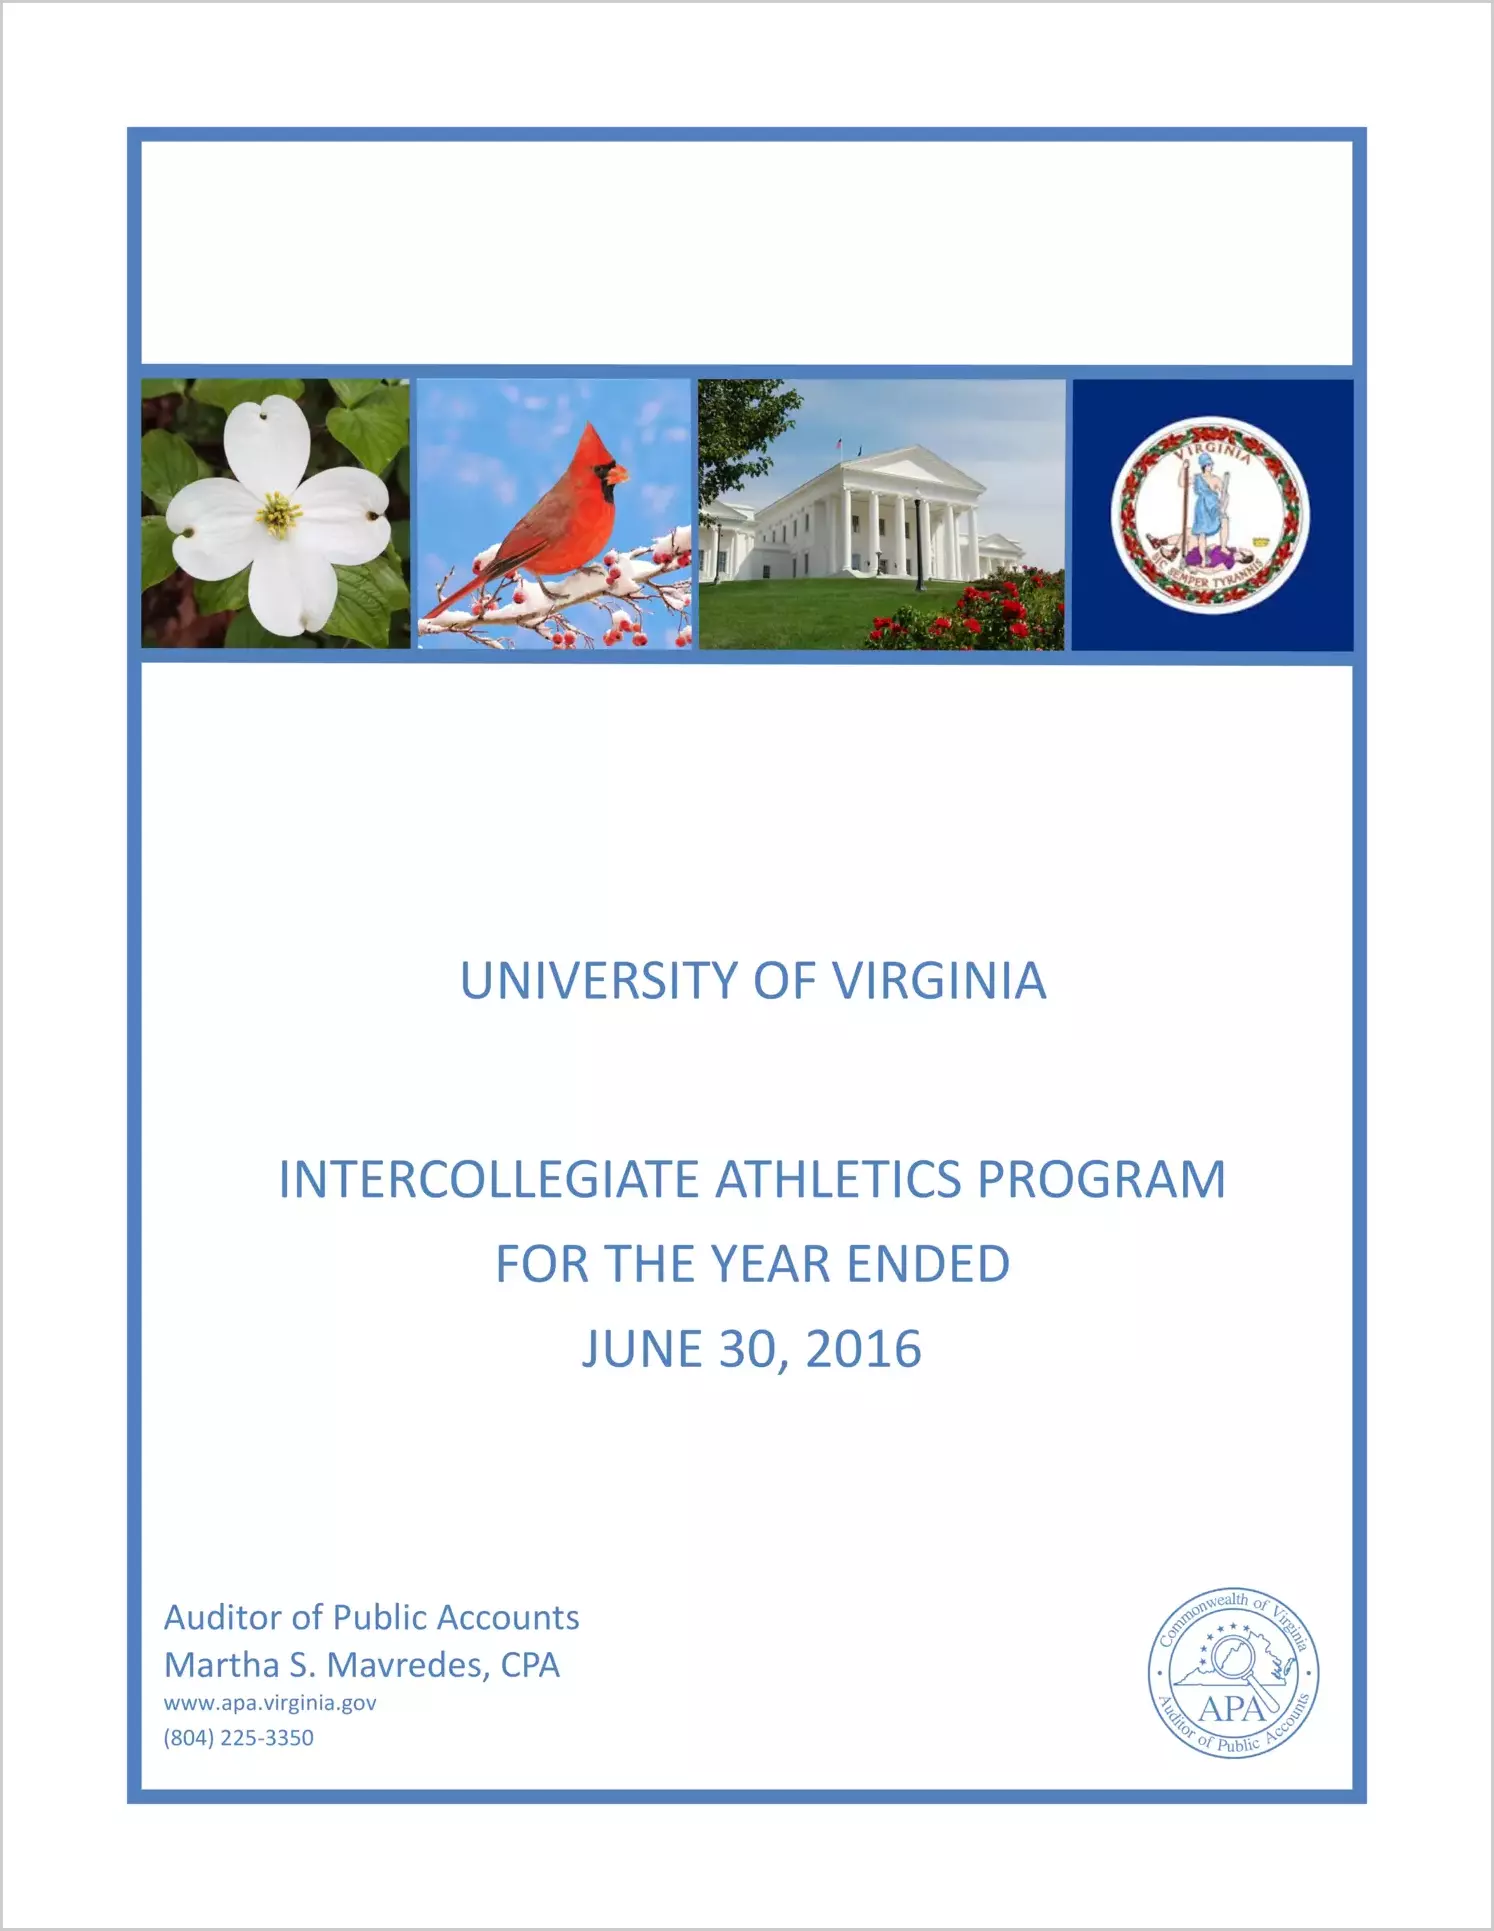 University of Virginia Intercollegiate Athletics Program for the year ended June 30, 2016